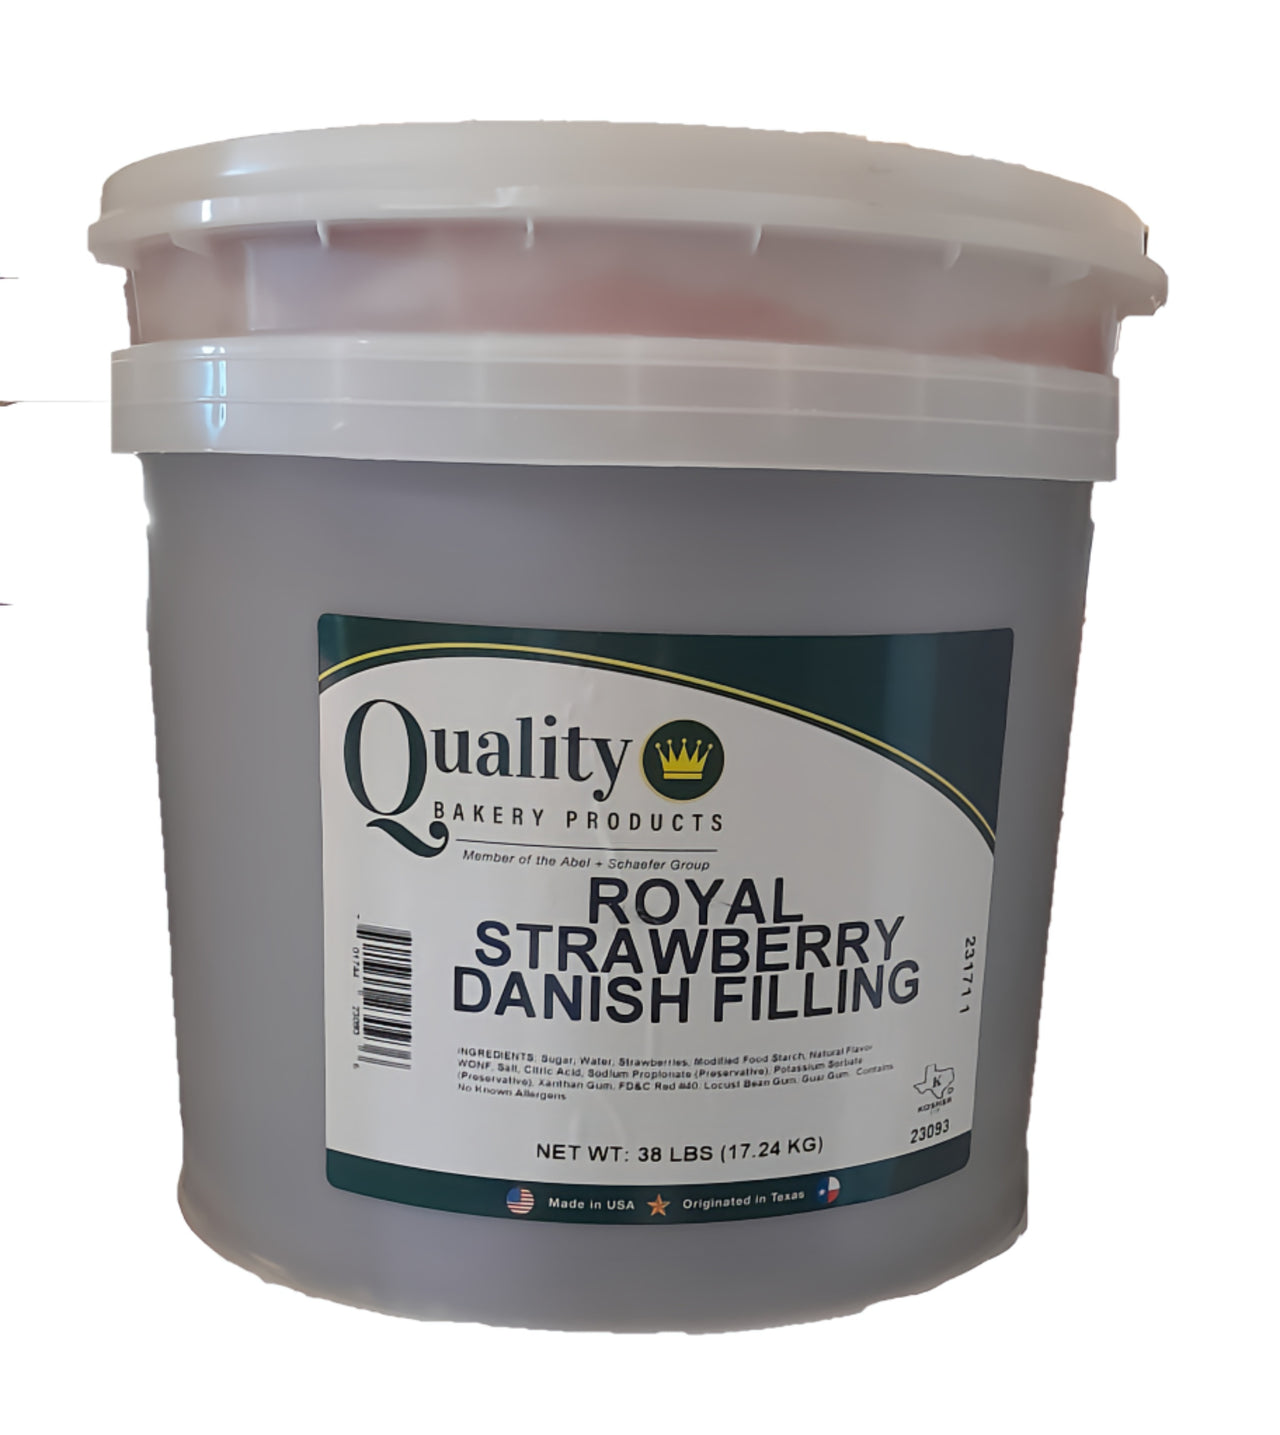 Royal Strawberry Danish Filling